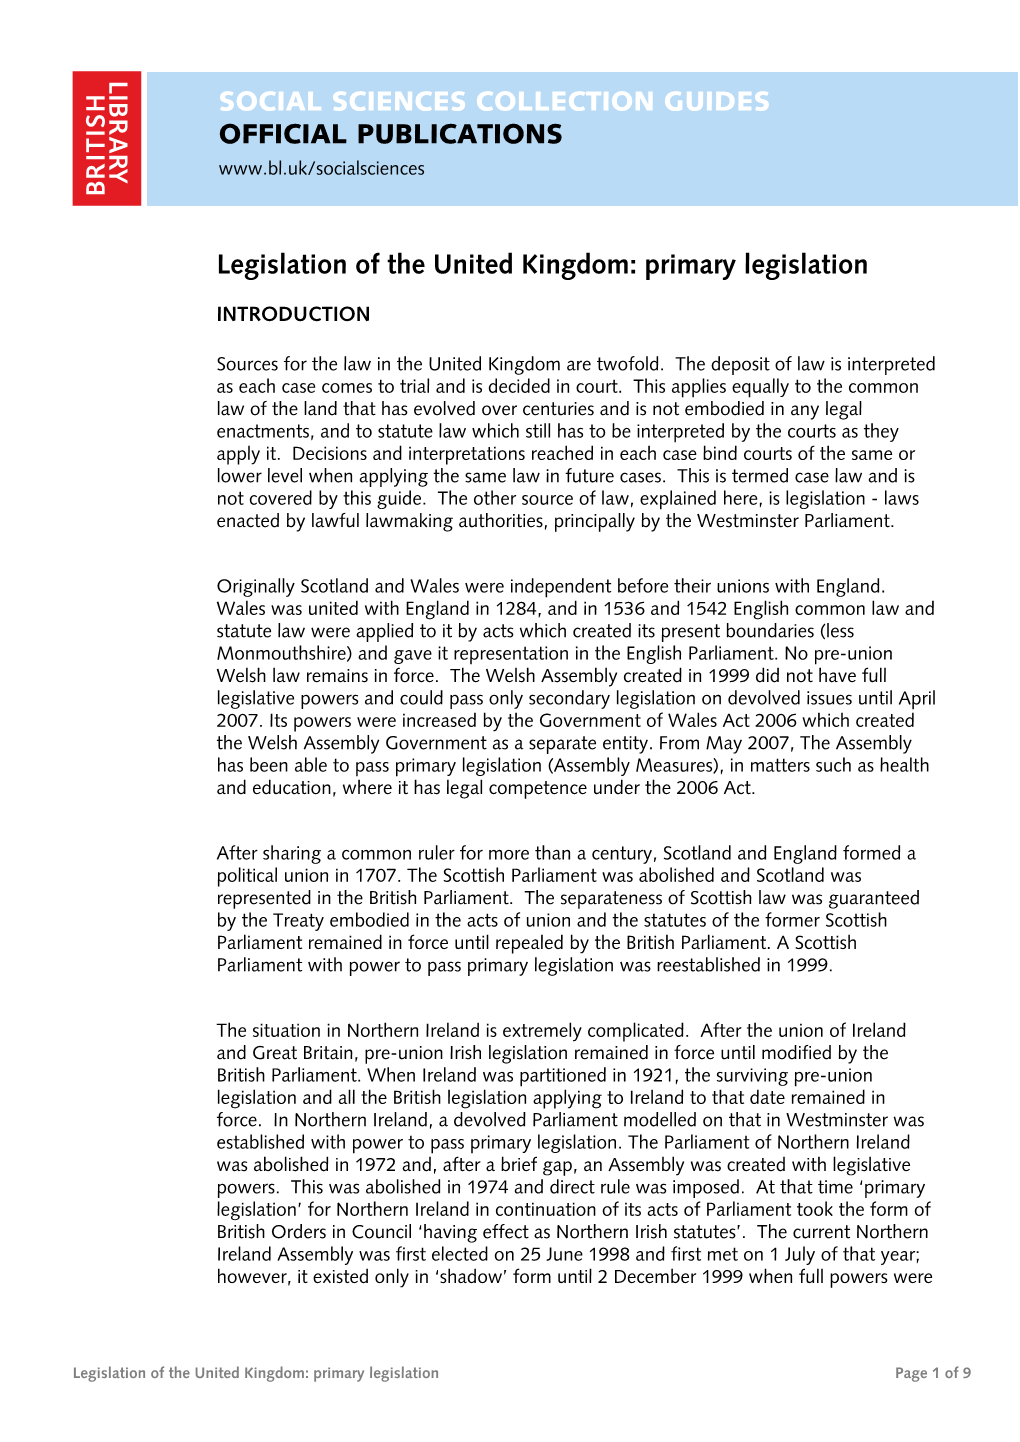 Primary Legislation